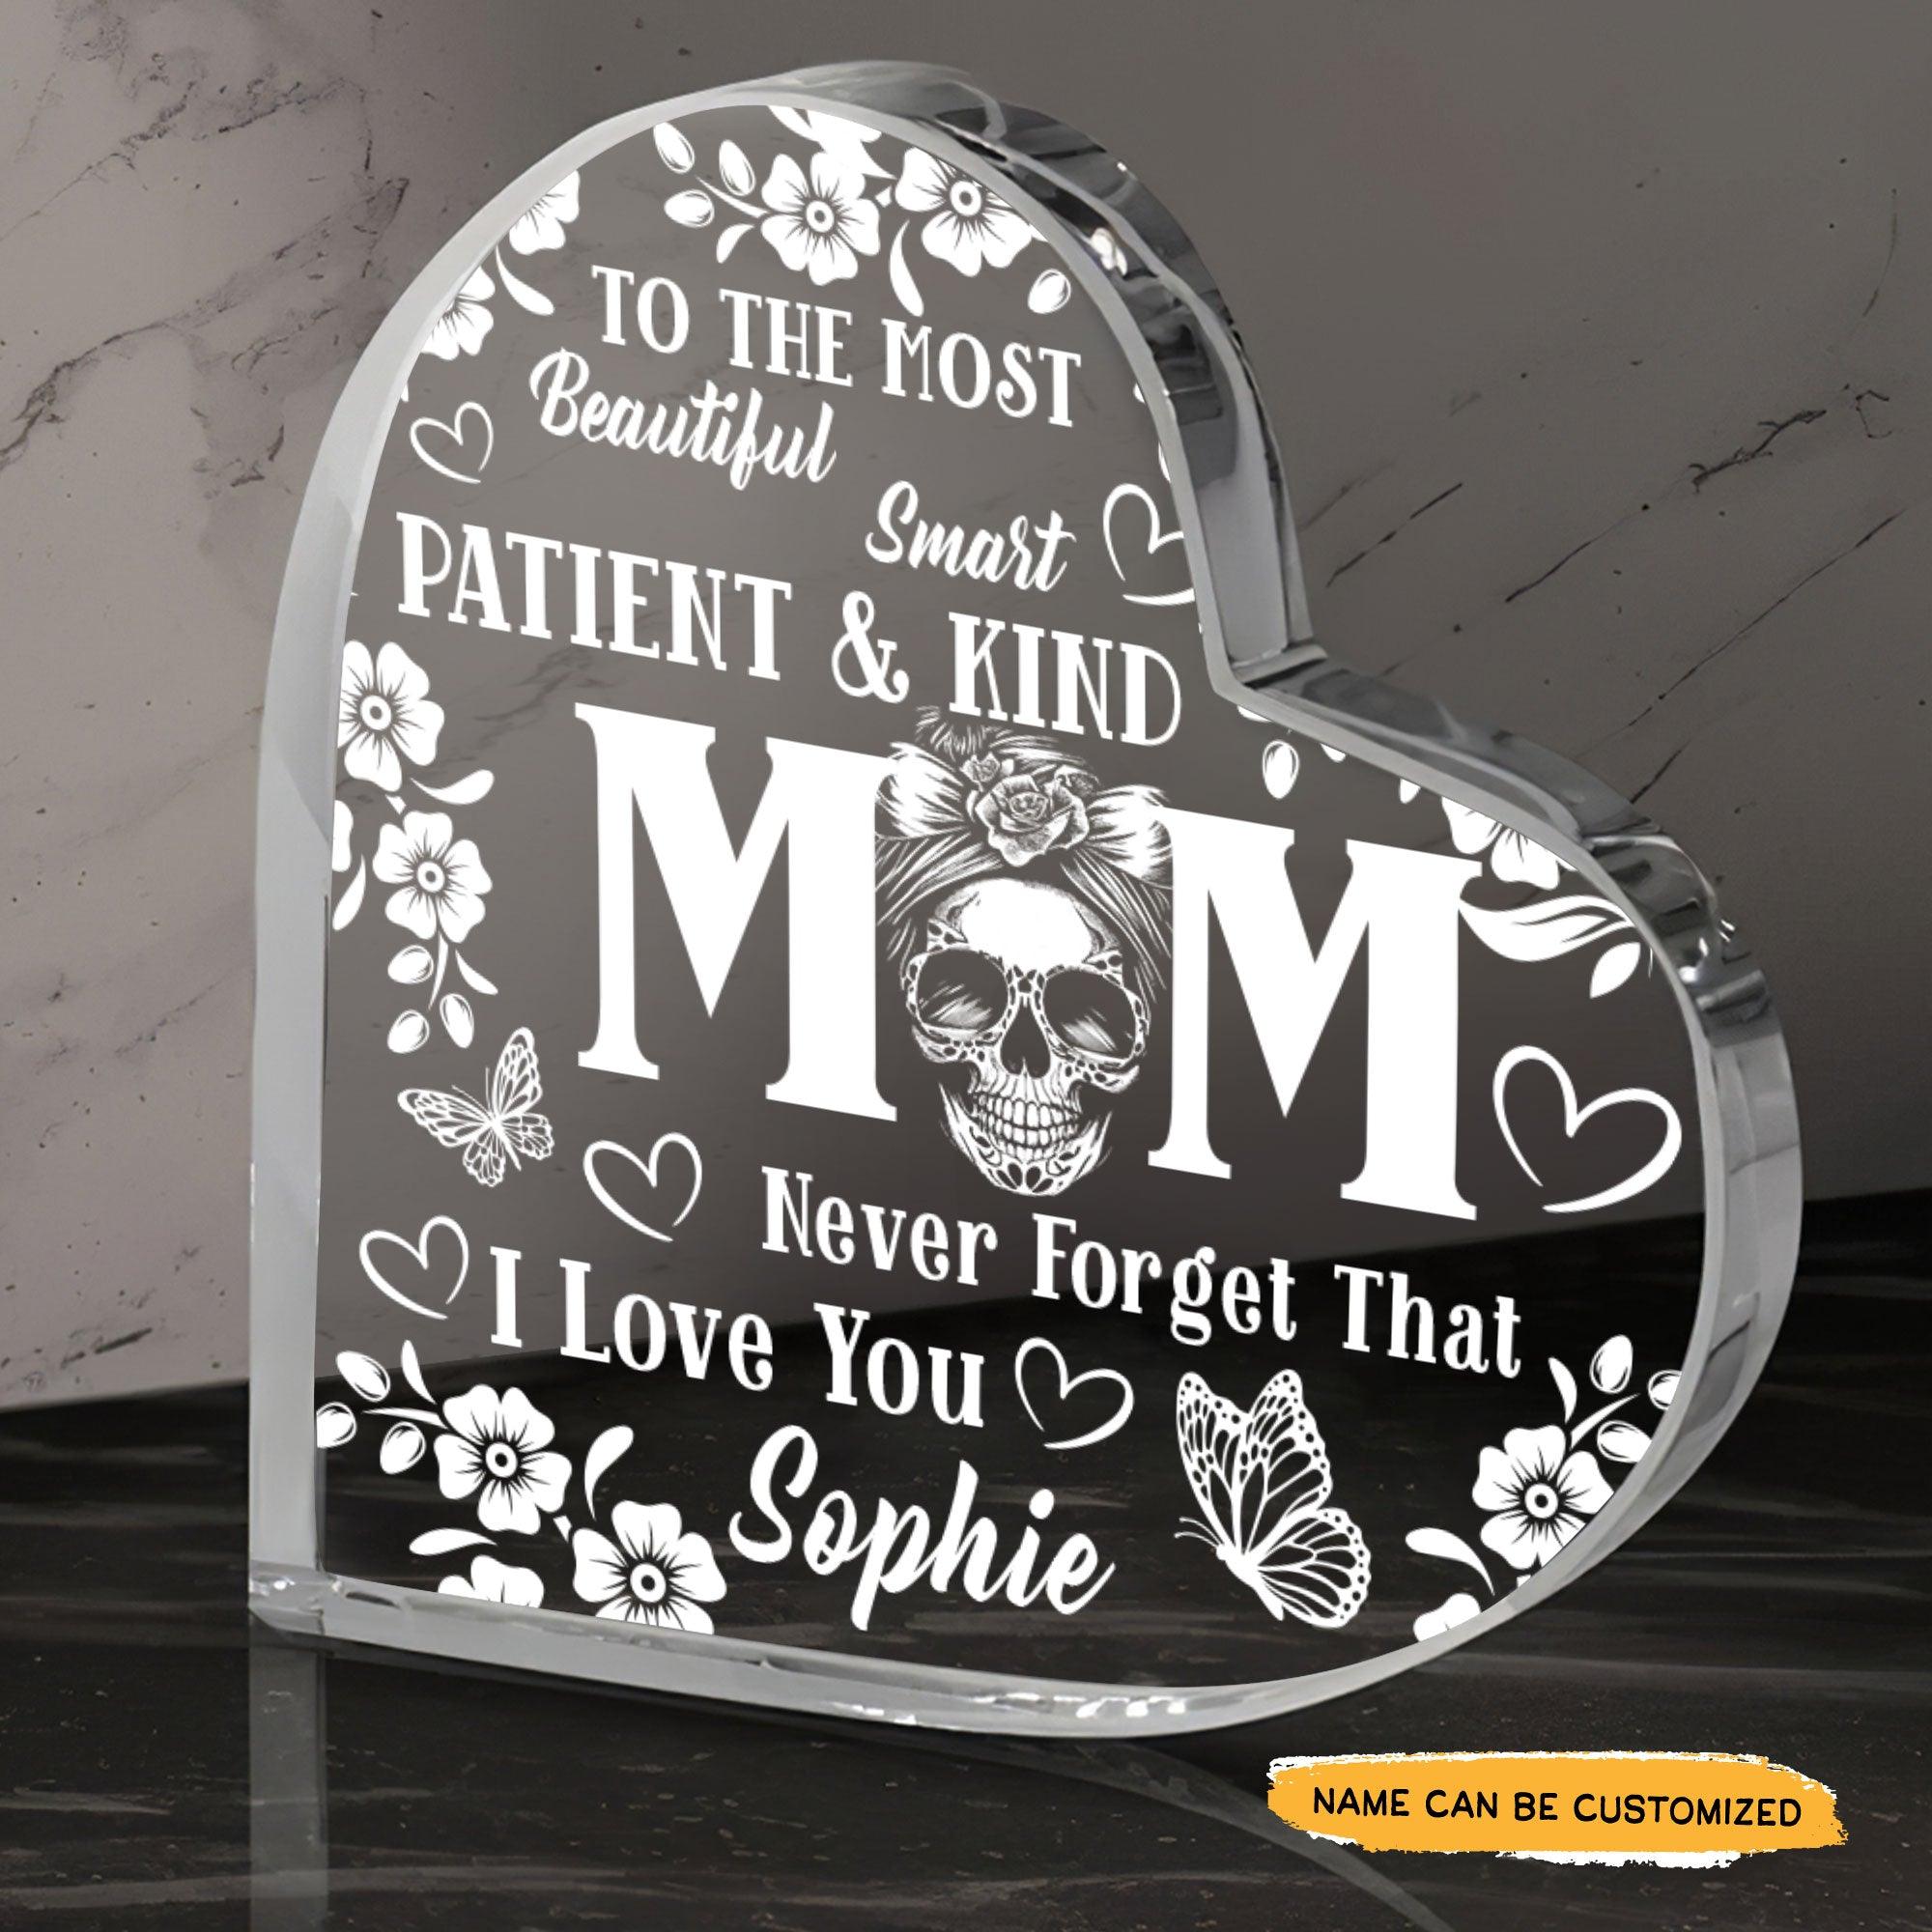 Patient & Kind Mom - Customized Skull Crystal Heart Anniversary Gifts - Wonder Skull